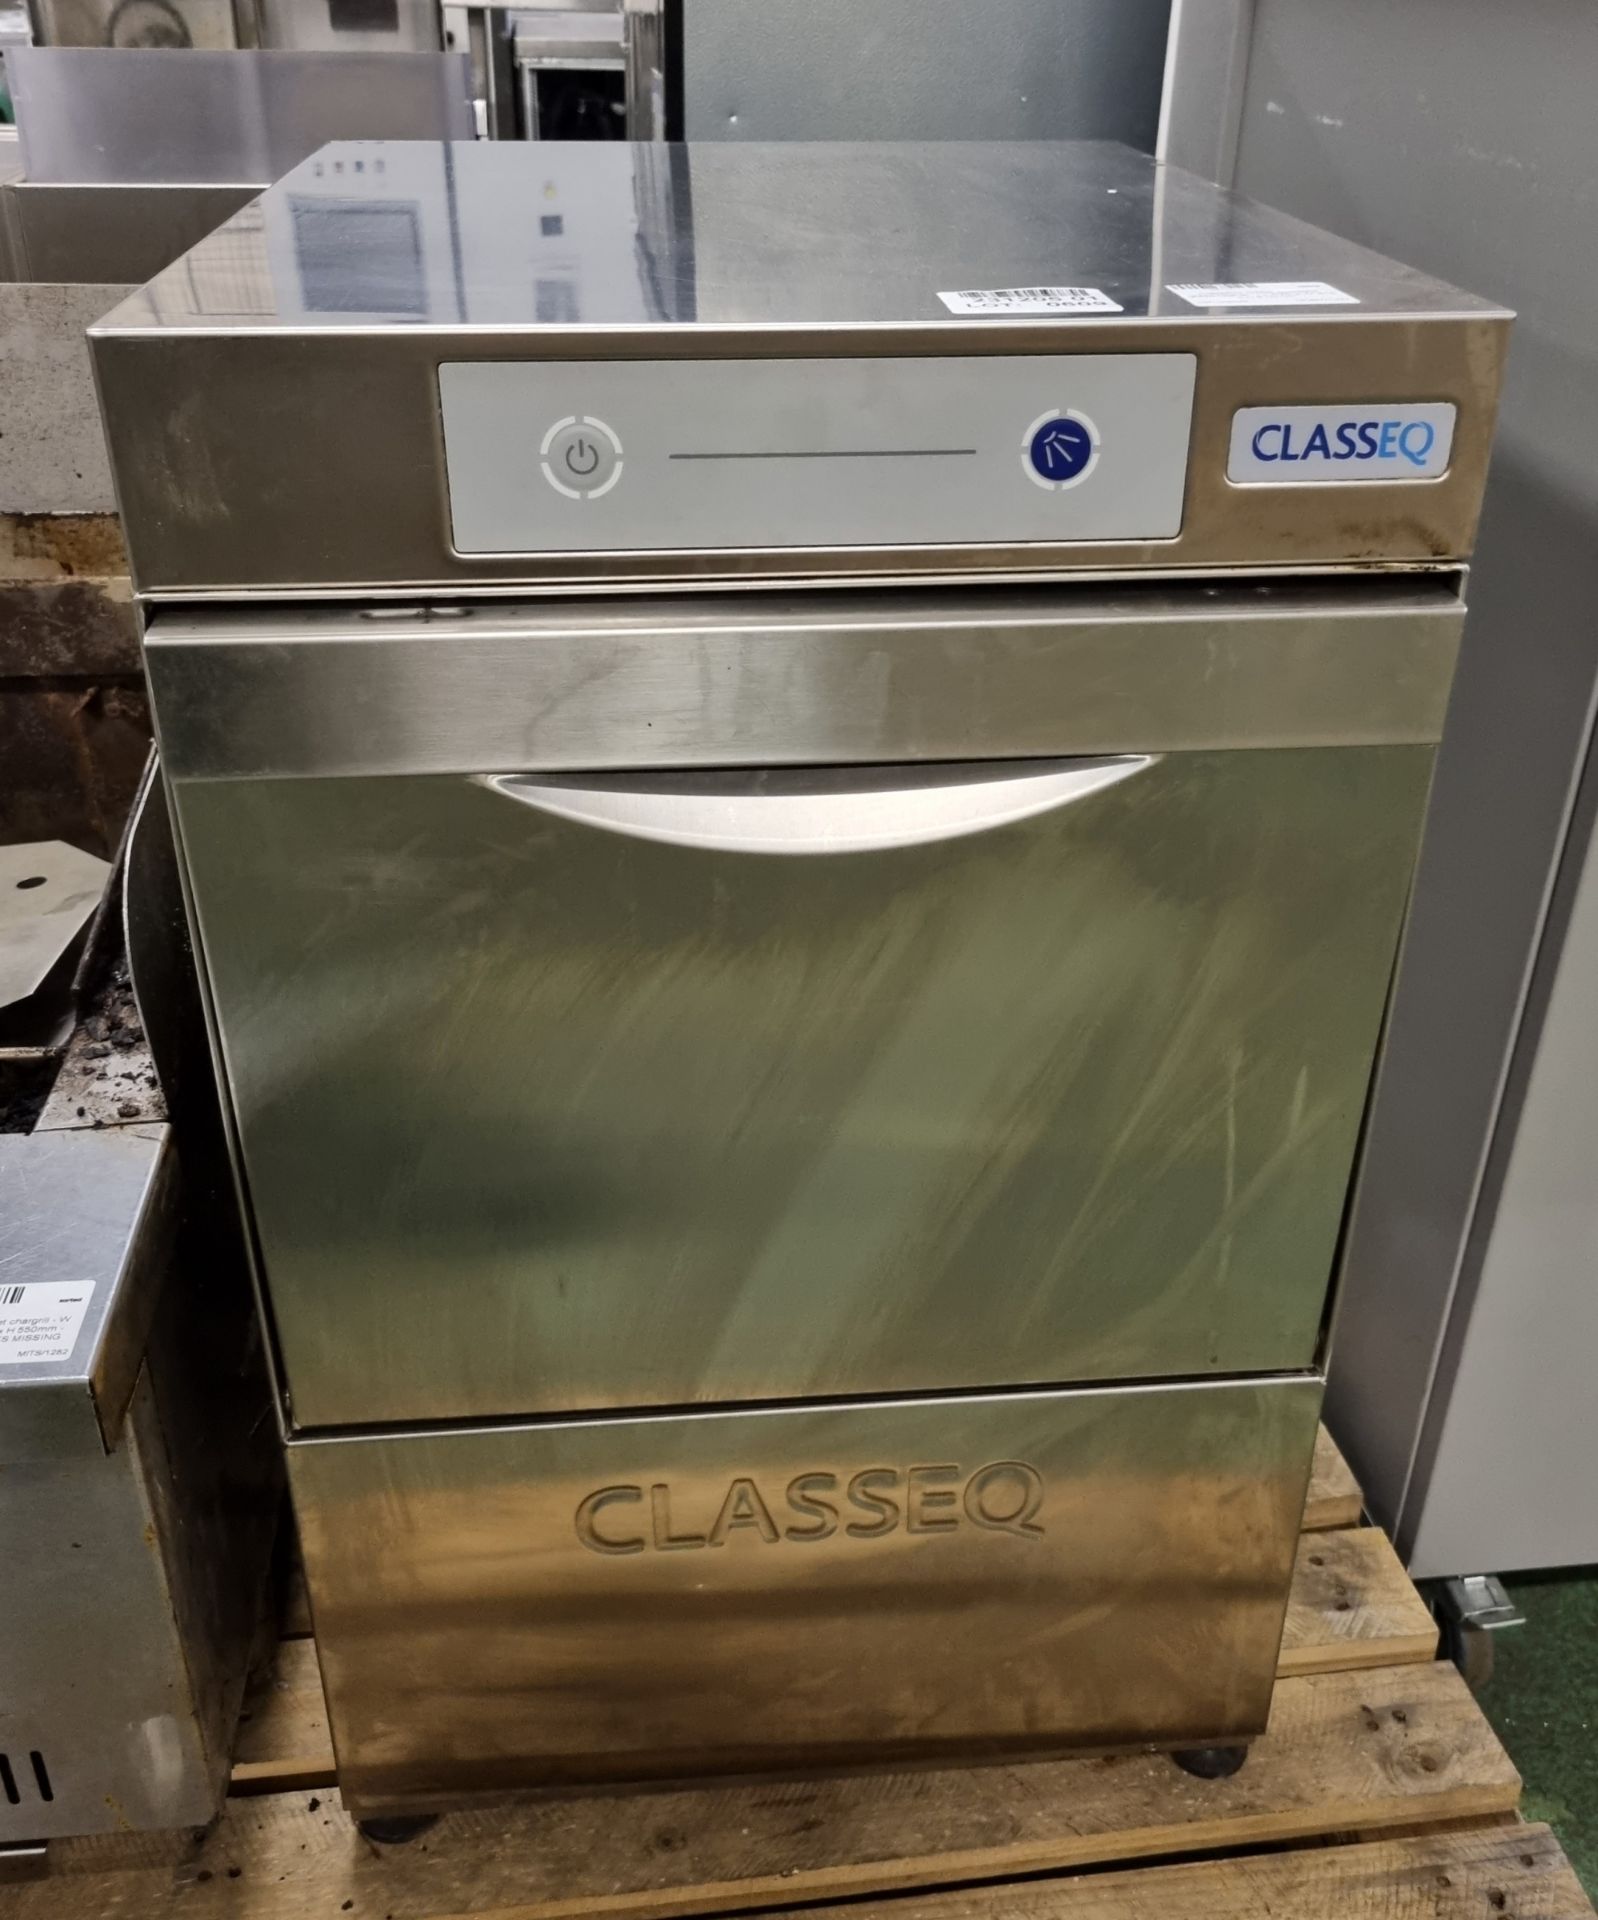 ClassEQ G350 compact glasswasher - L 520 x W 415 x H 610mm